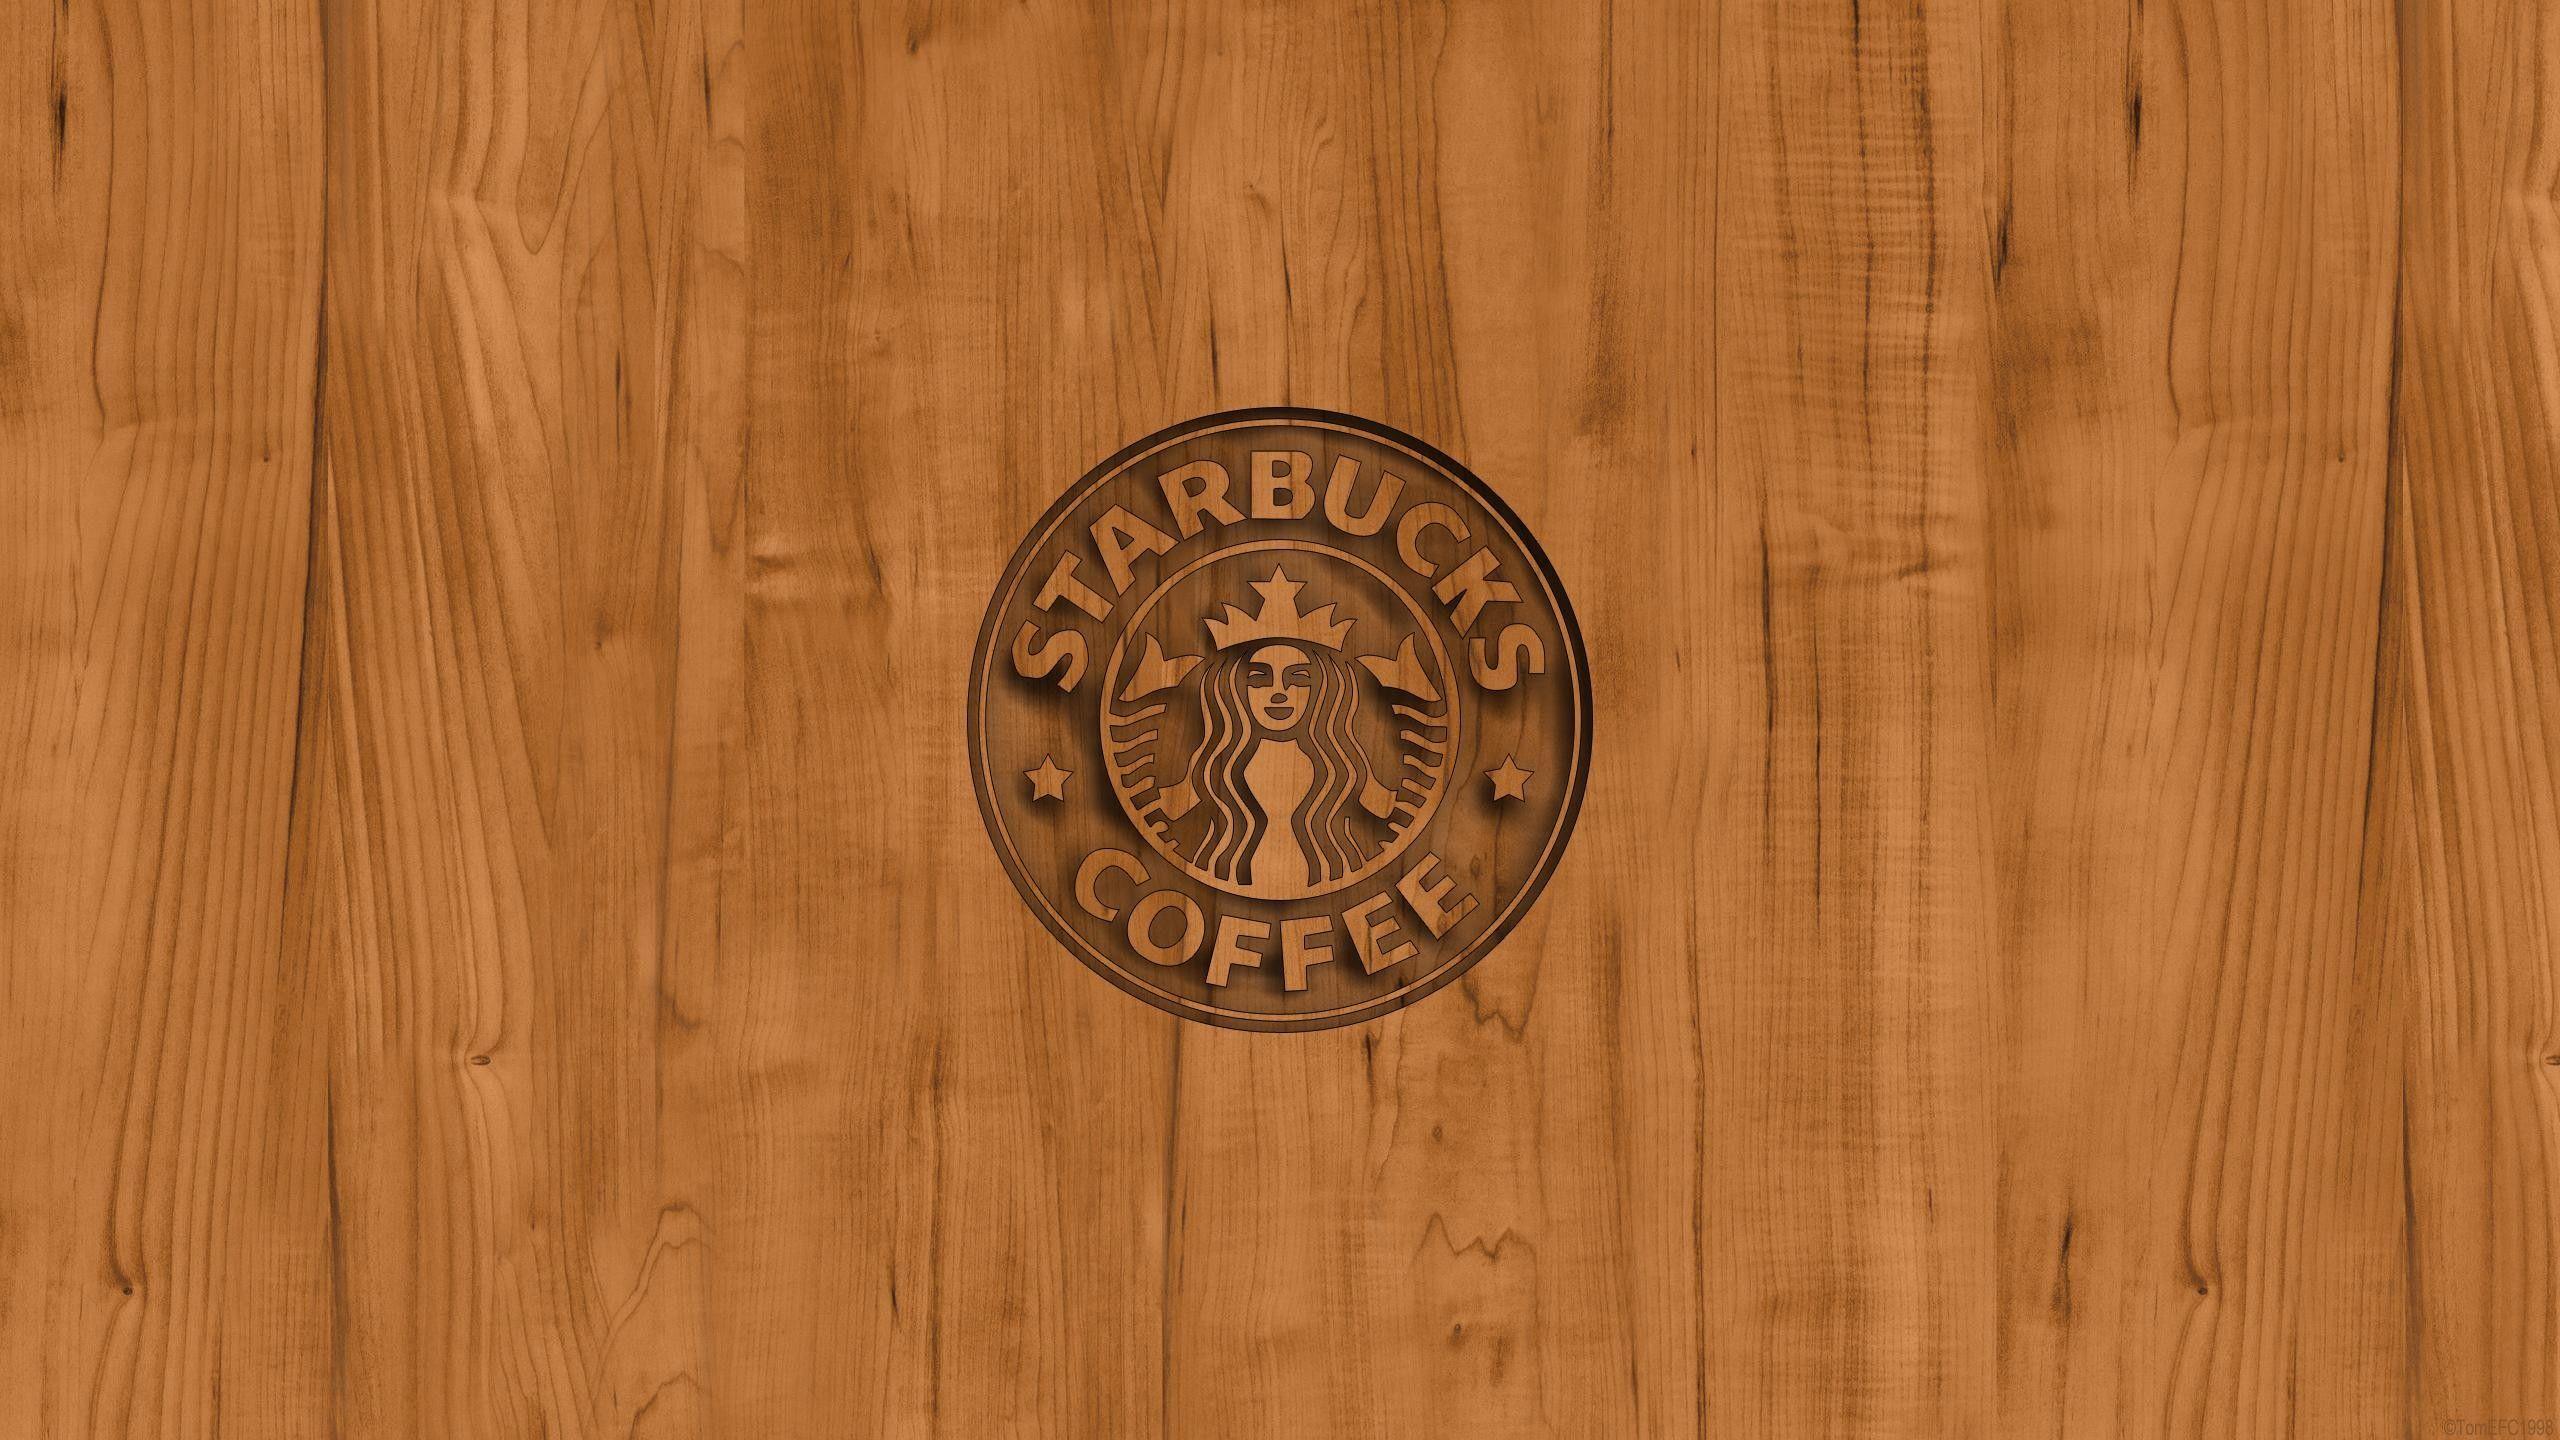 Starbucks HQ Photo. Beautiful image HD Picture & Desktop Wallpaper